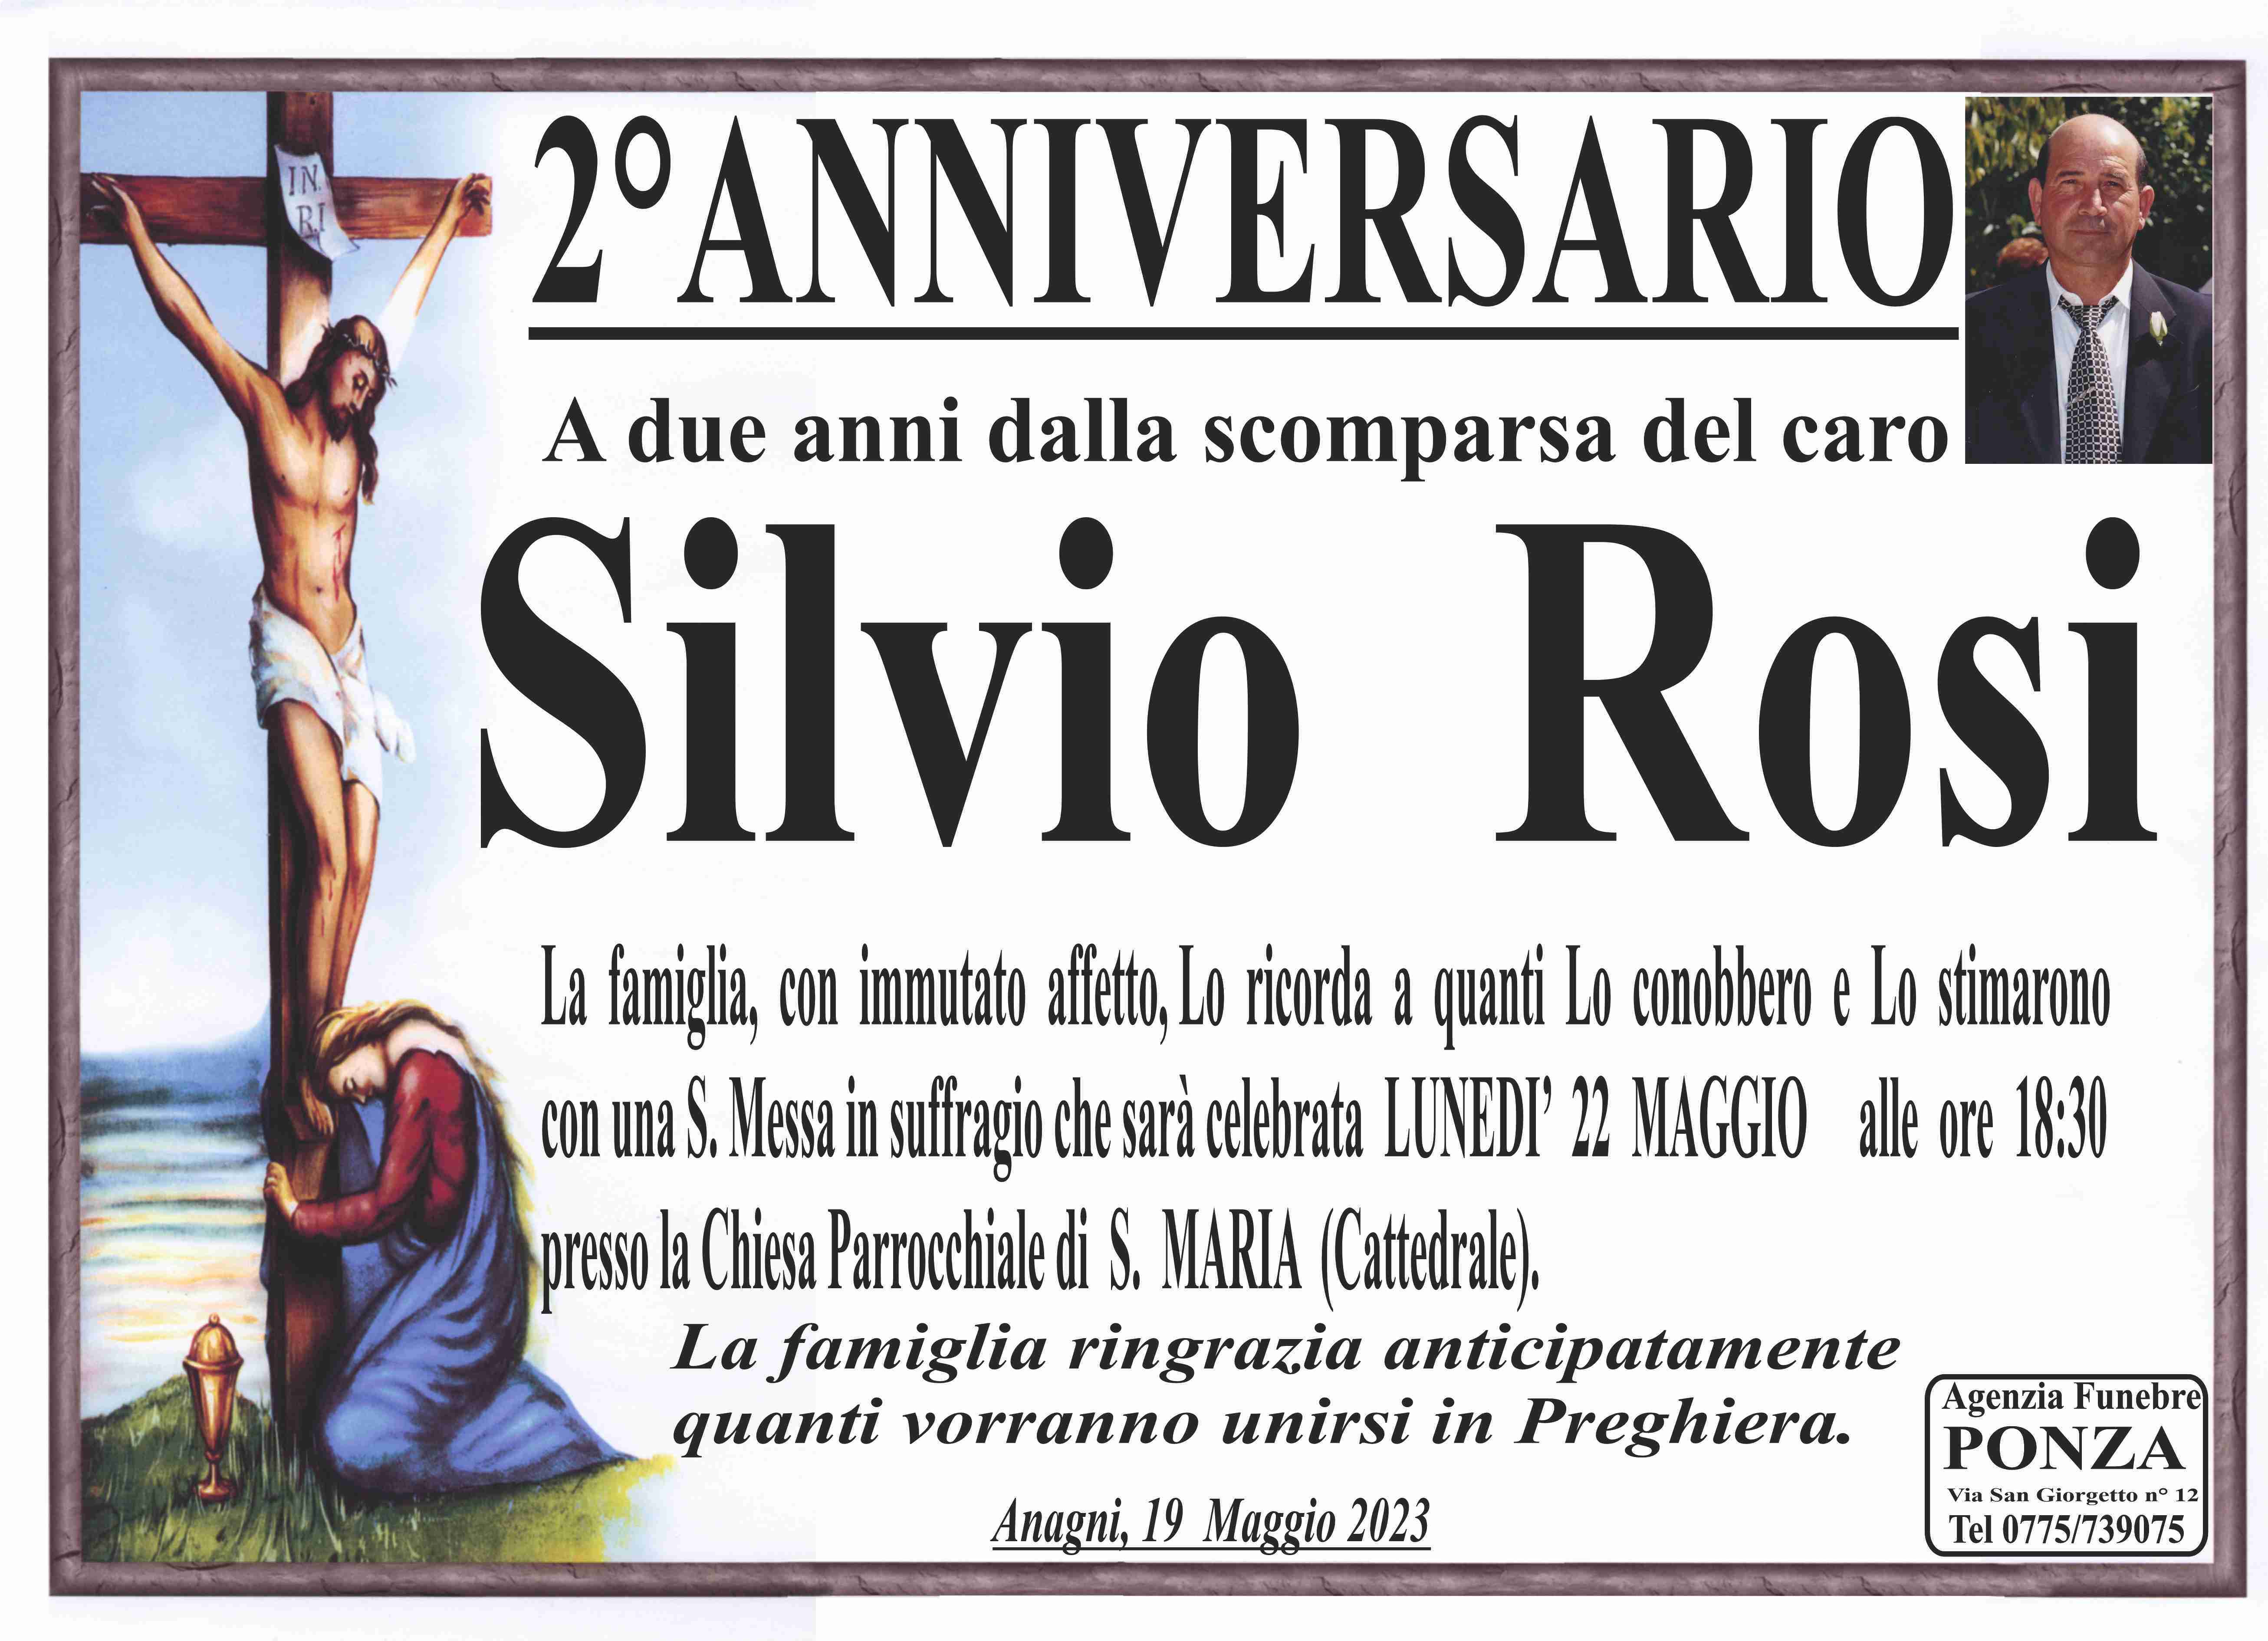 Silvio Rosi